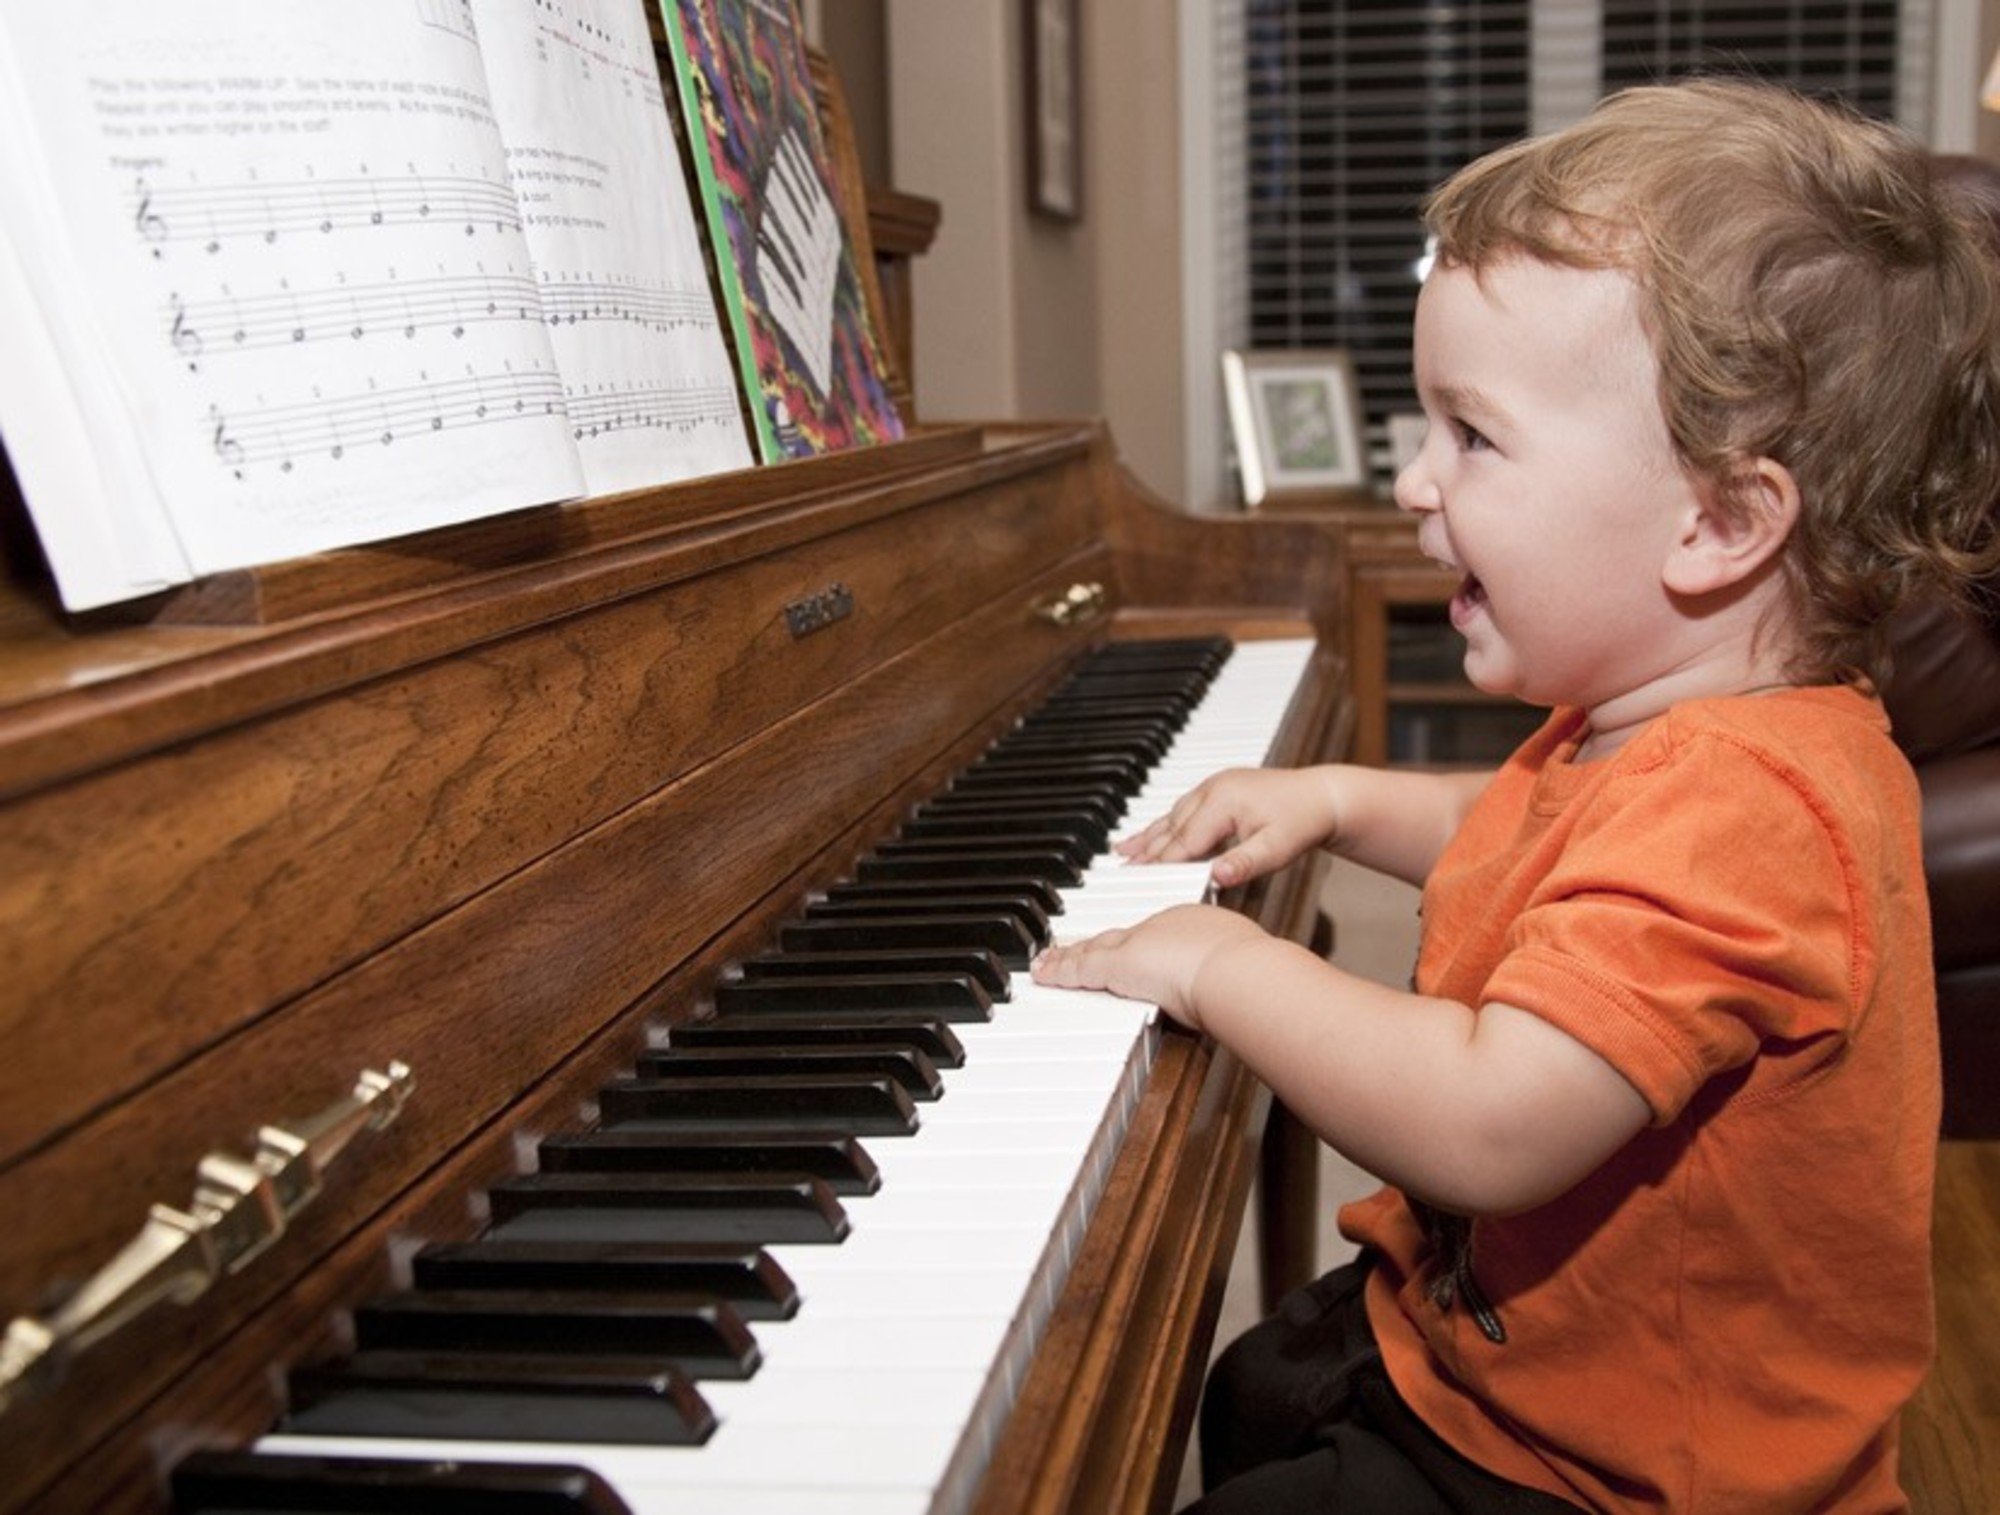 He can play piano. Фортепиано для детей. Пианино для детей. Музыкальные инструменты для детей. Пианино в детском саду.